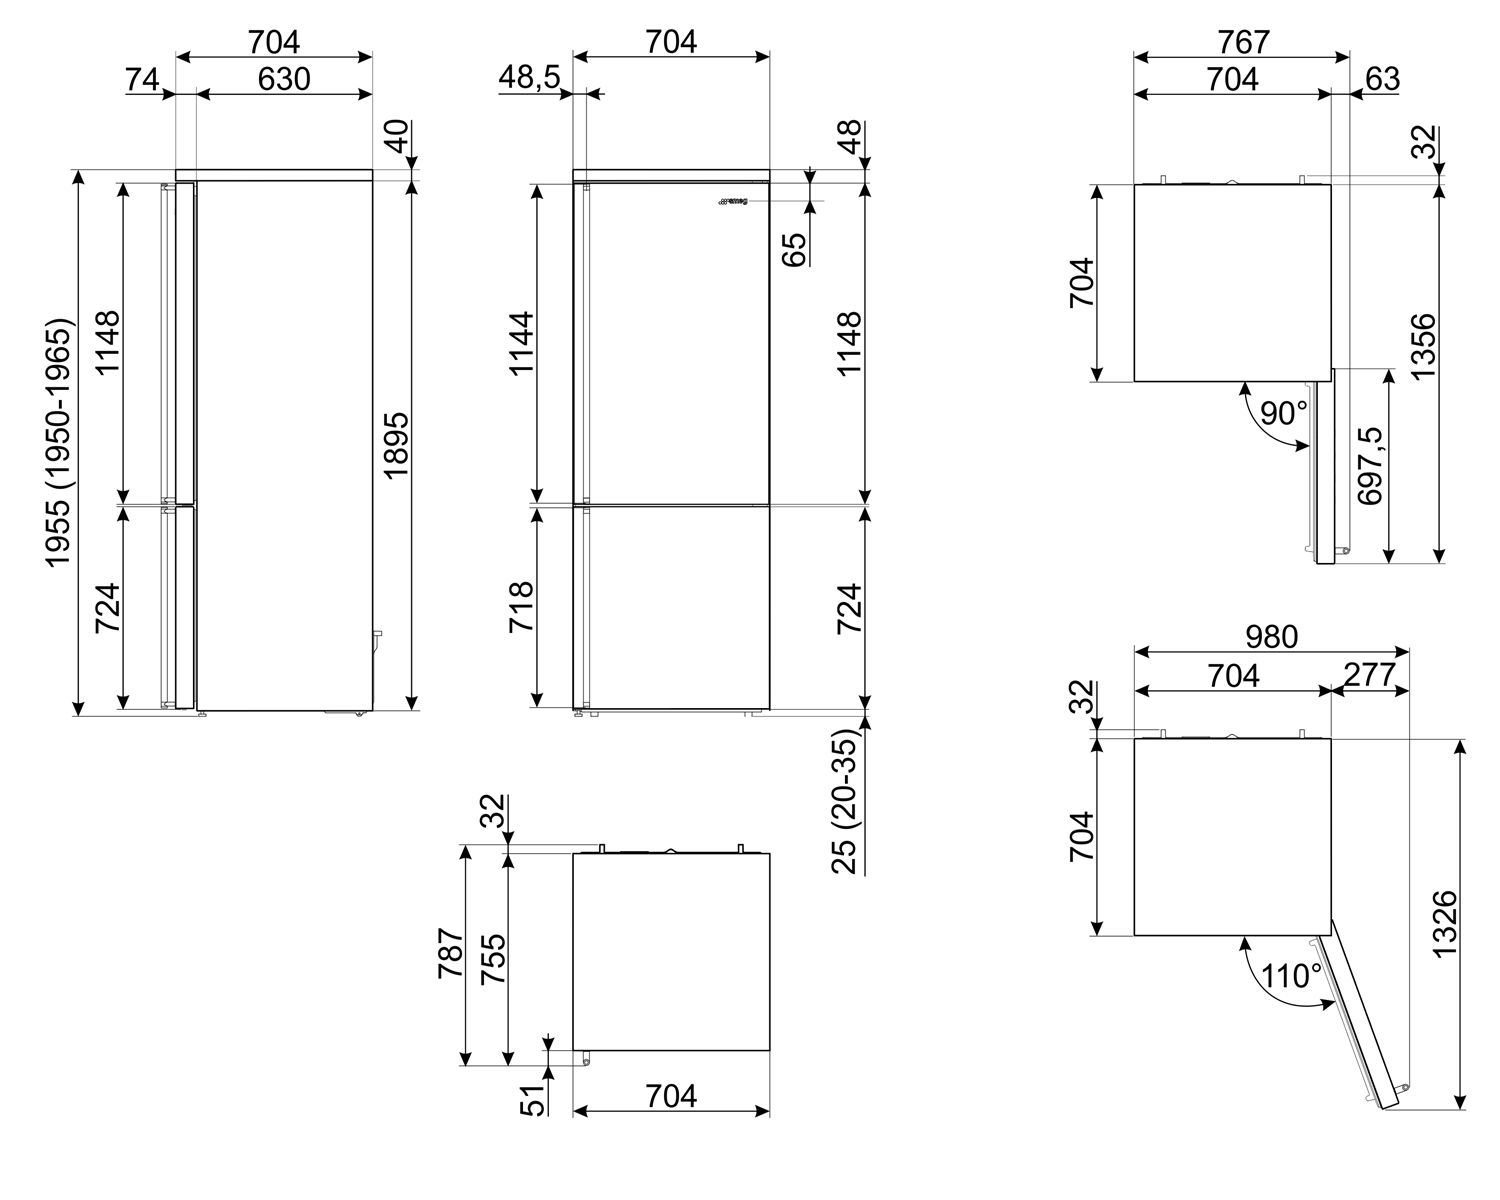 Maattekening SMEG koelkast rvs FA3905RX5